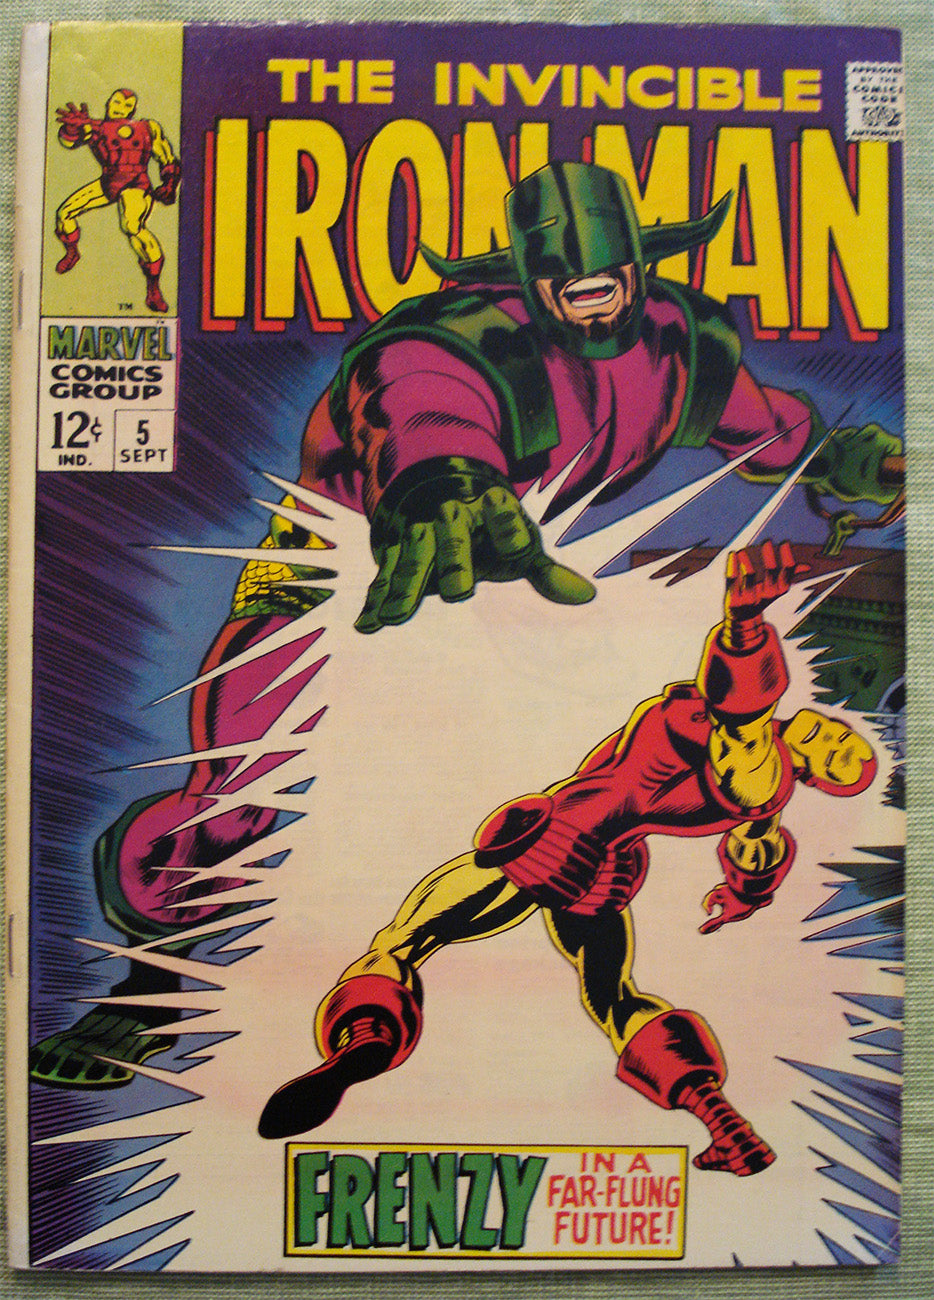 The Invincible Iron Man #5 Marvel Comics September 1968